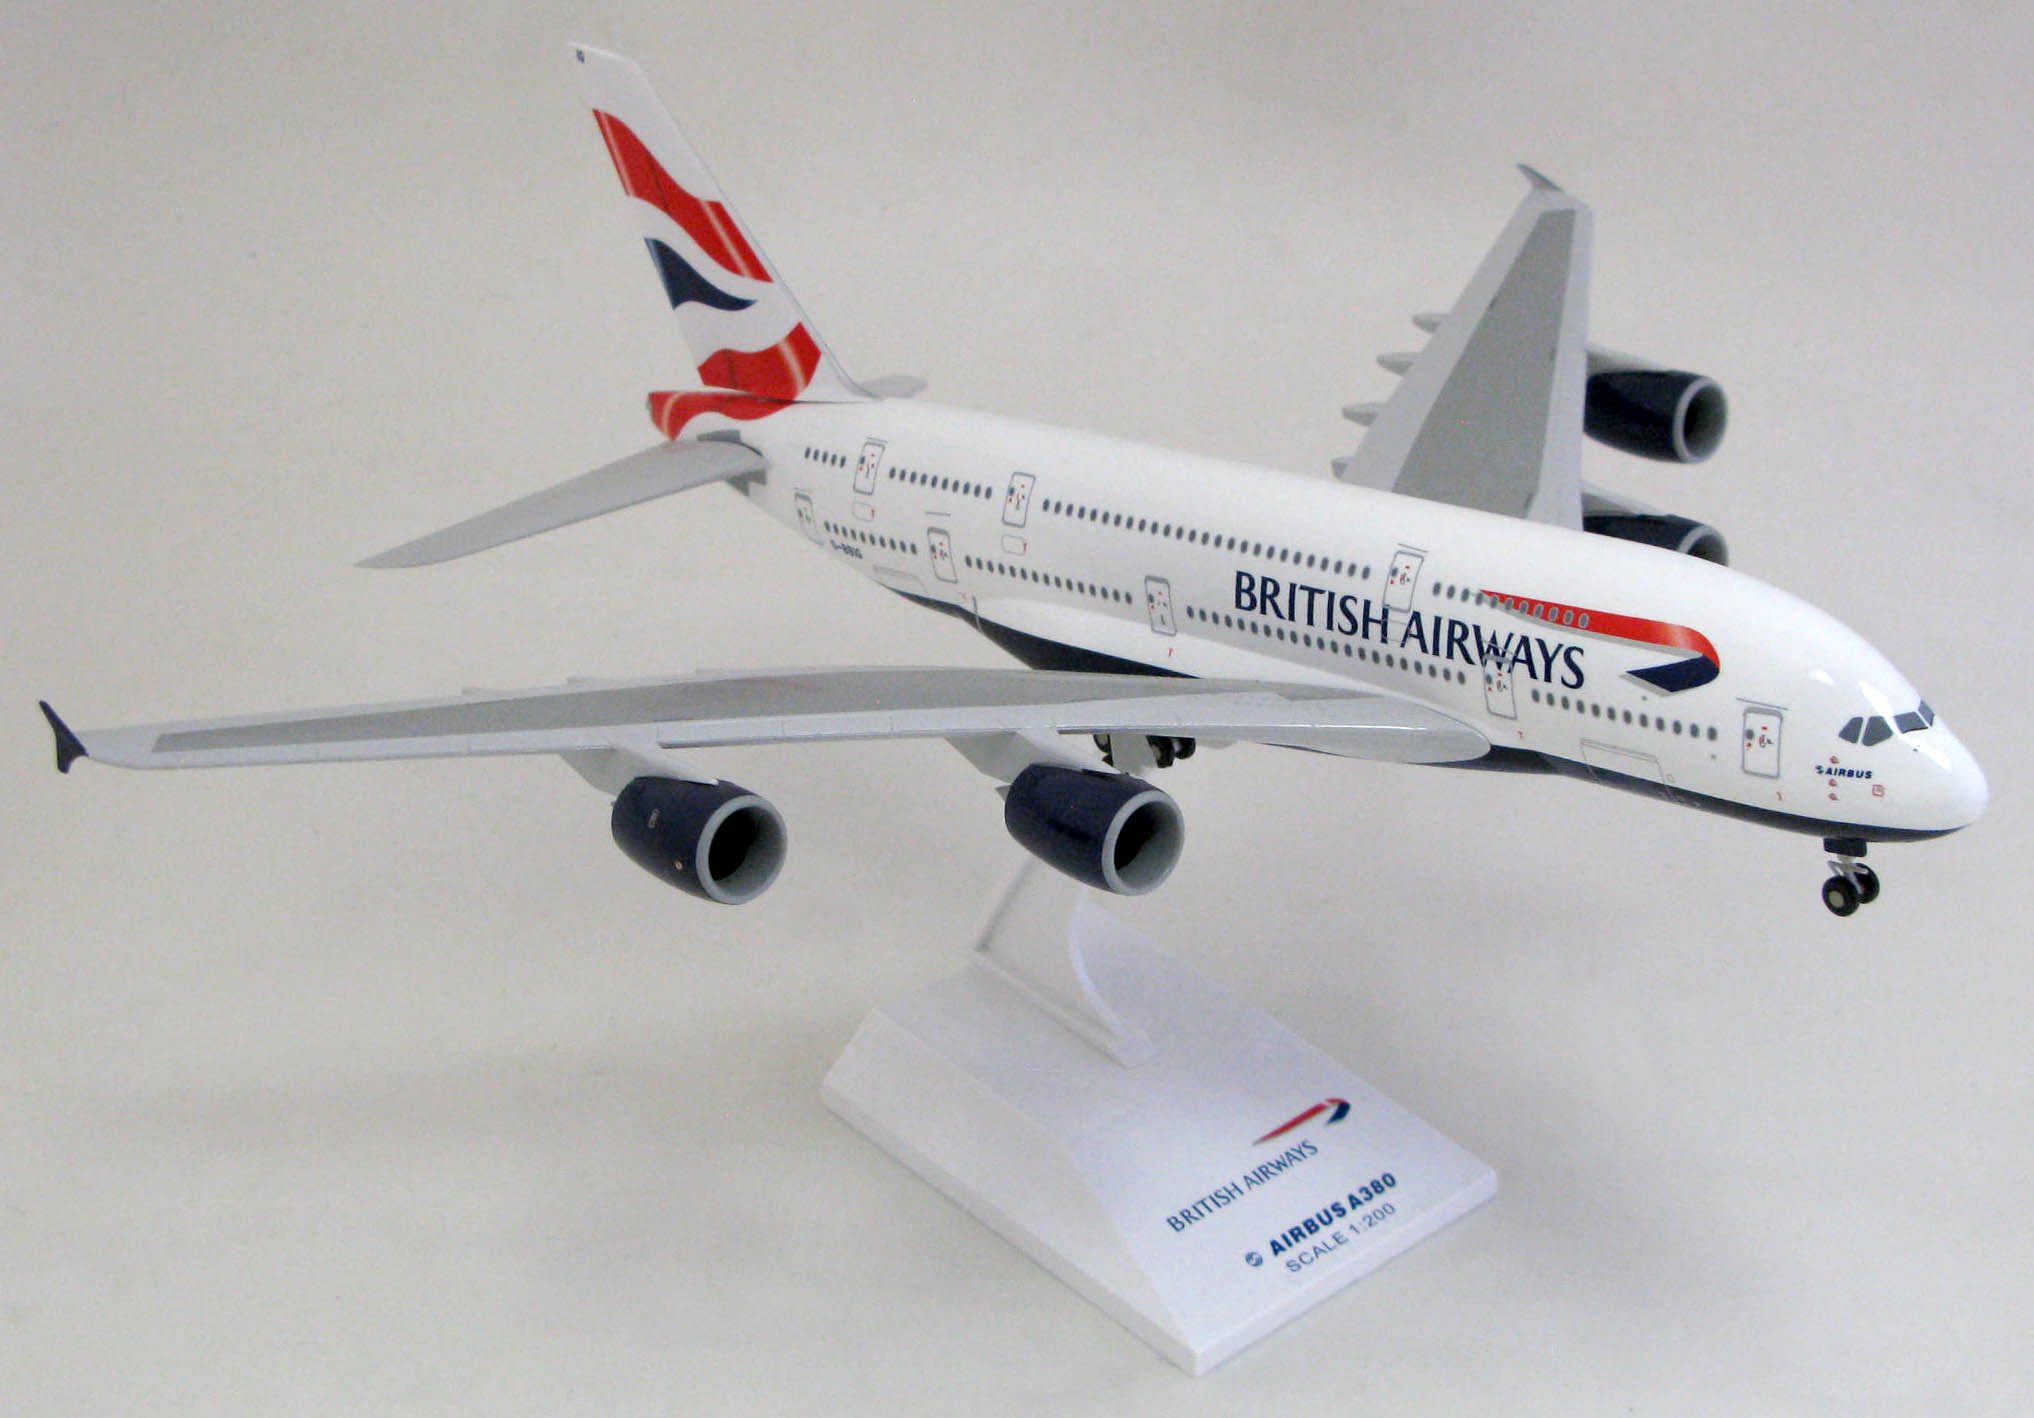 Airbus 380 model in British Airways livery